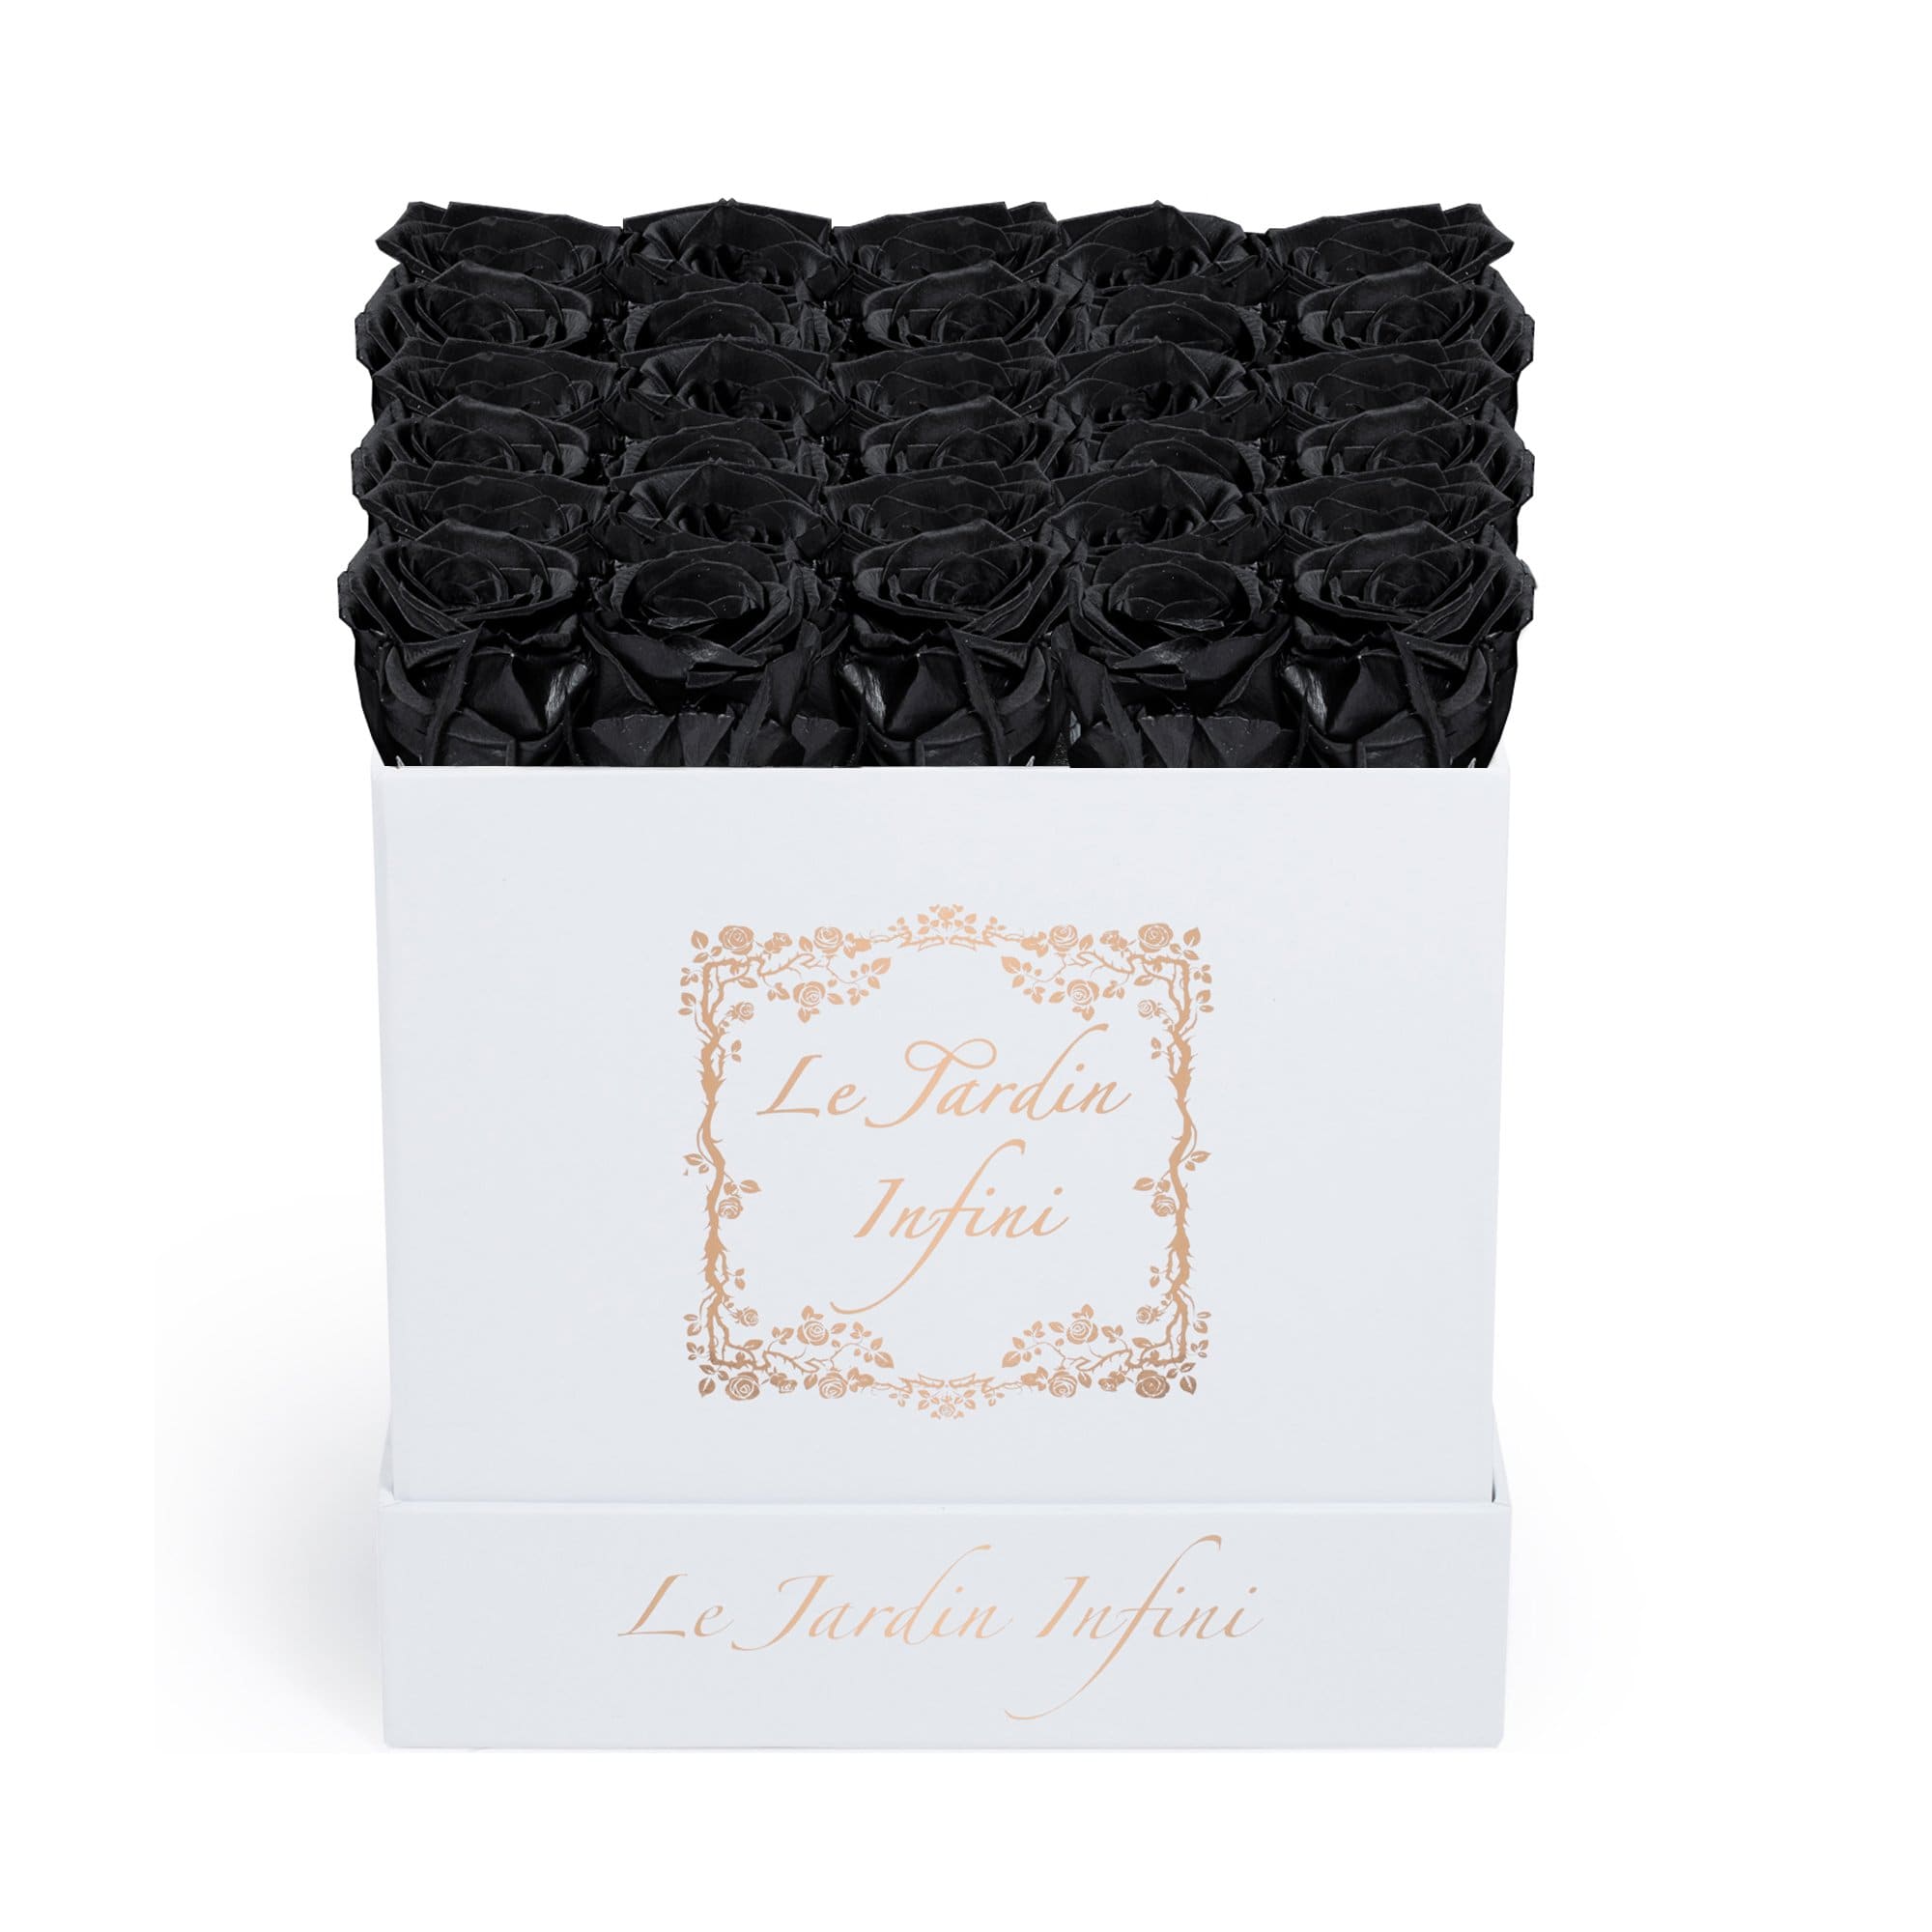 Black Preserved Roses - Medium Square White Box - Le Jardin Infini Roses in a Box